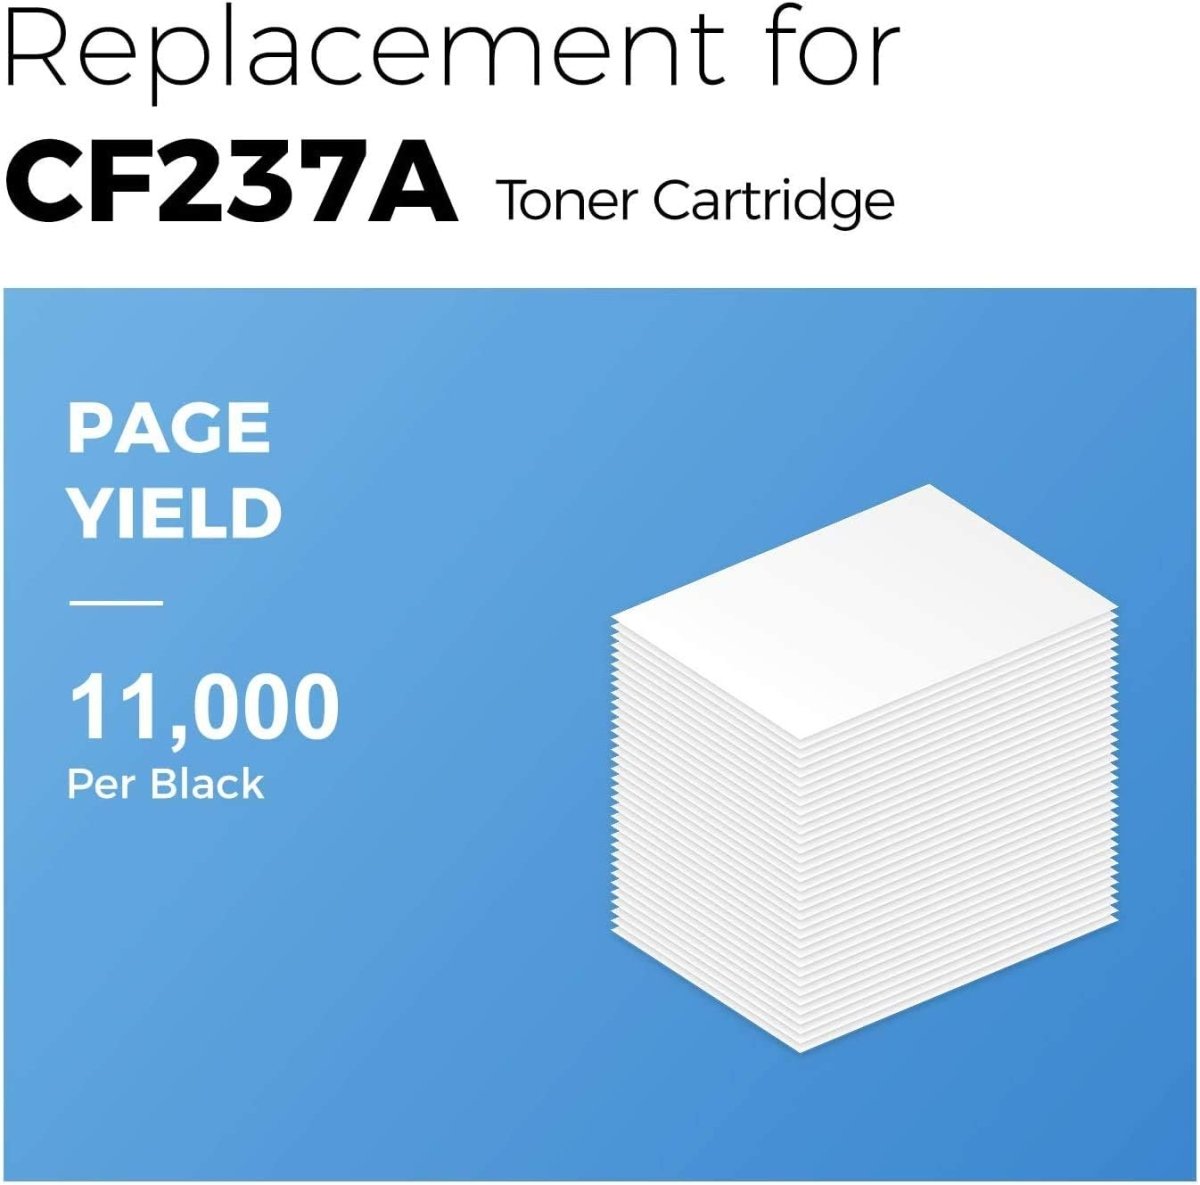 HP 37A CF237A Compatible Toner Cartridge Black 1 Pack - Linford Office:Printer Ink & Toner Cartridge